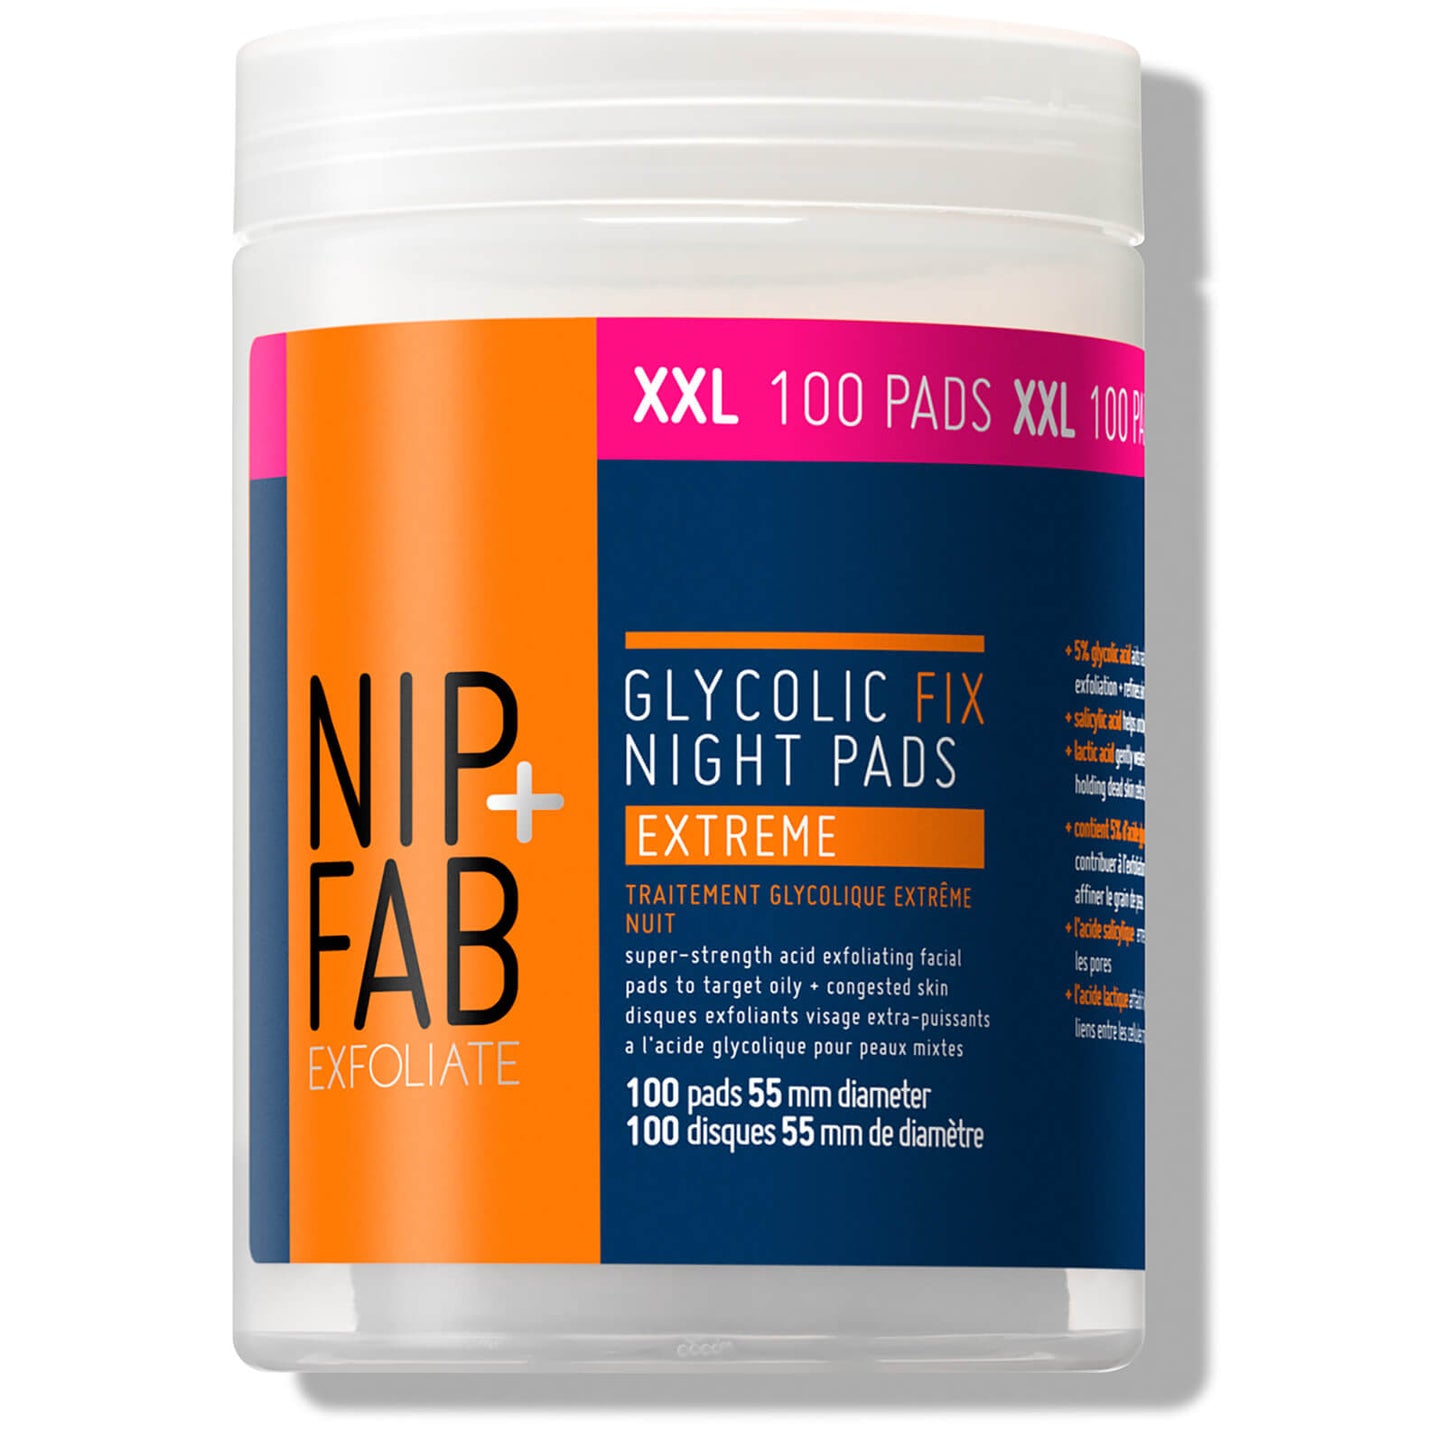 NIP+FAB Glycolic Fix Extreme Pads XXL 5%